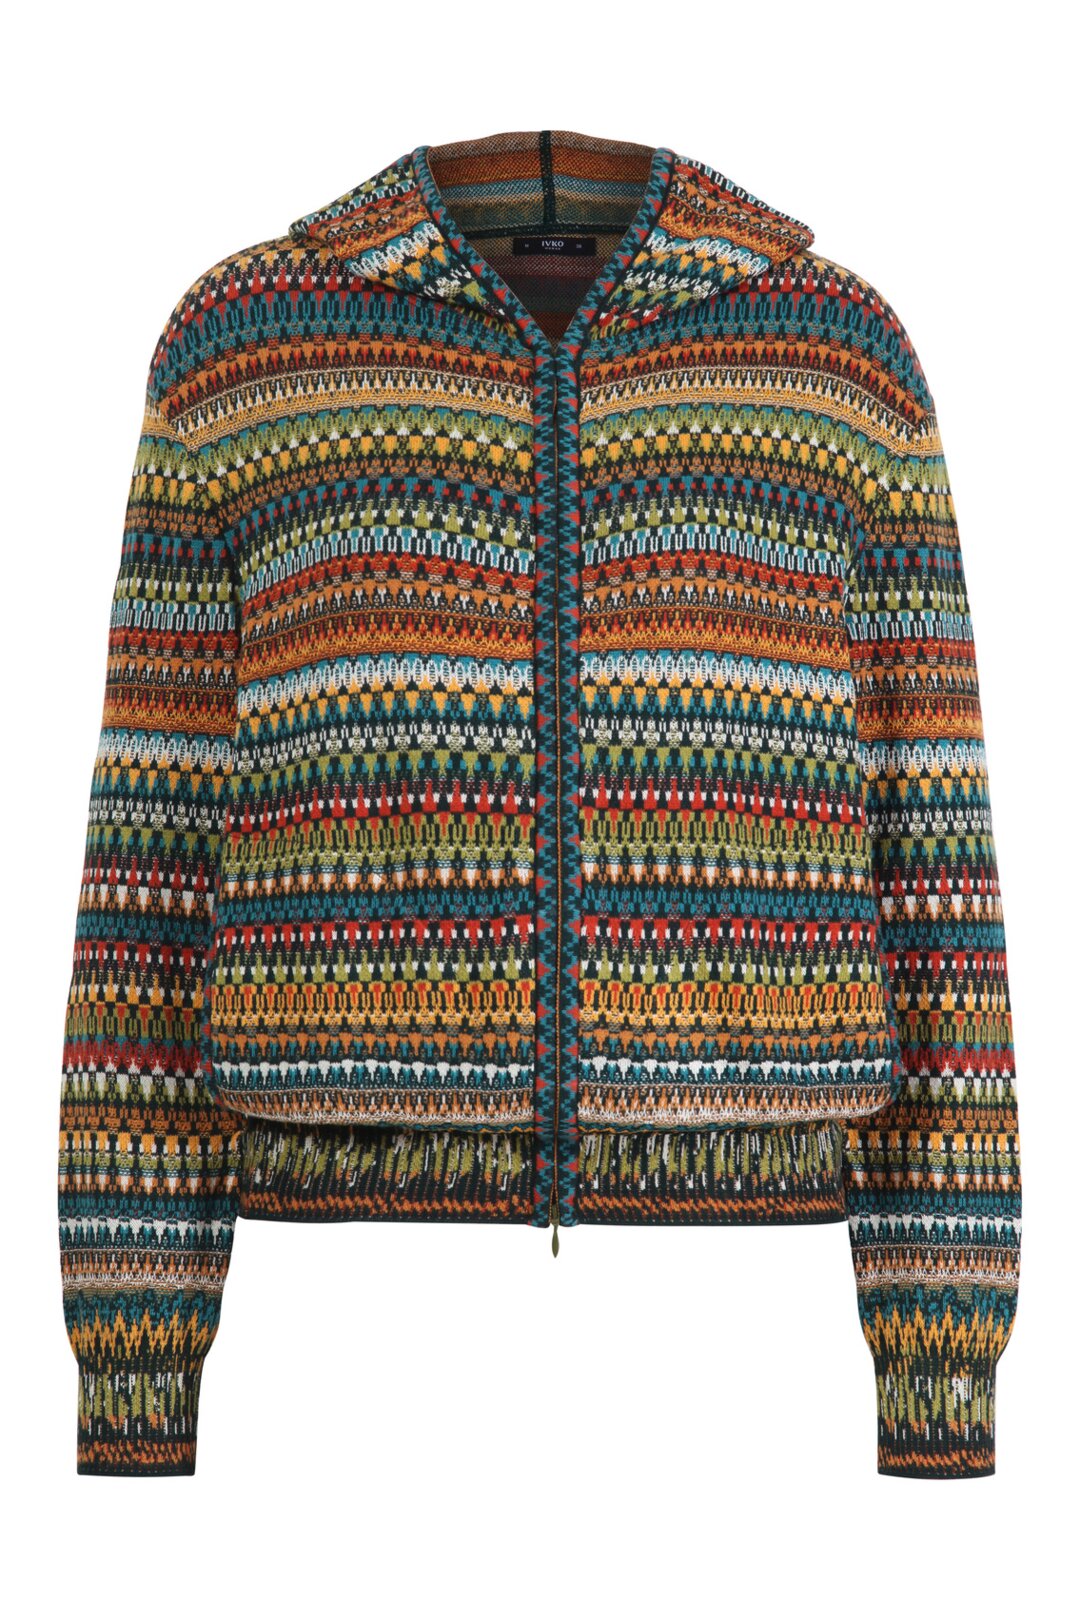 Jacquard Jacket with Hoody, Stripe Pattern